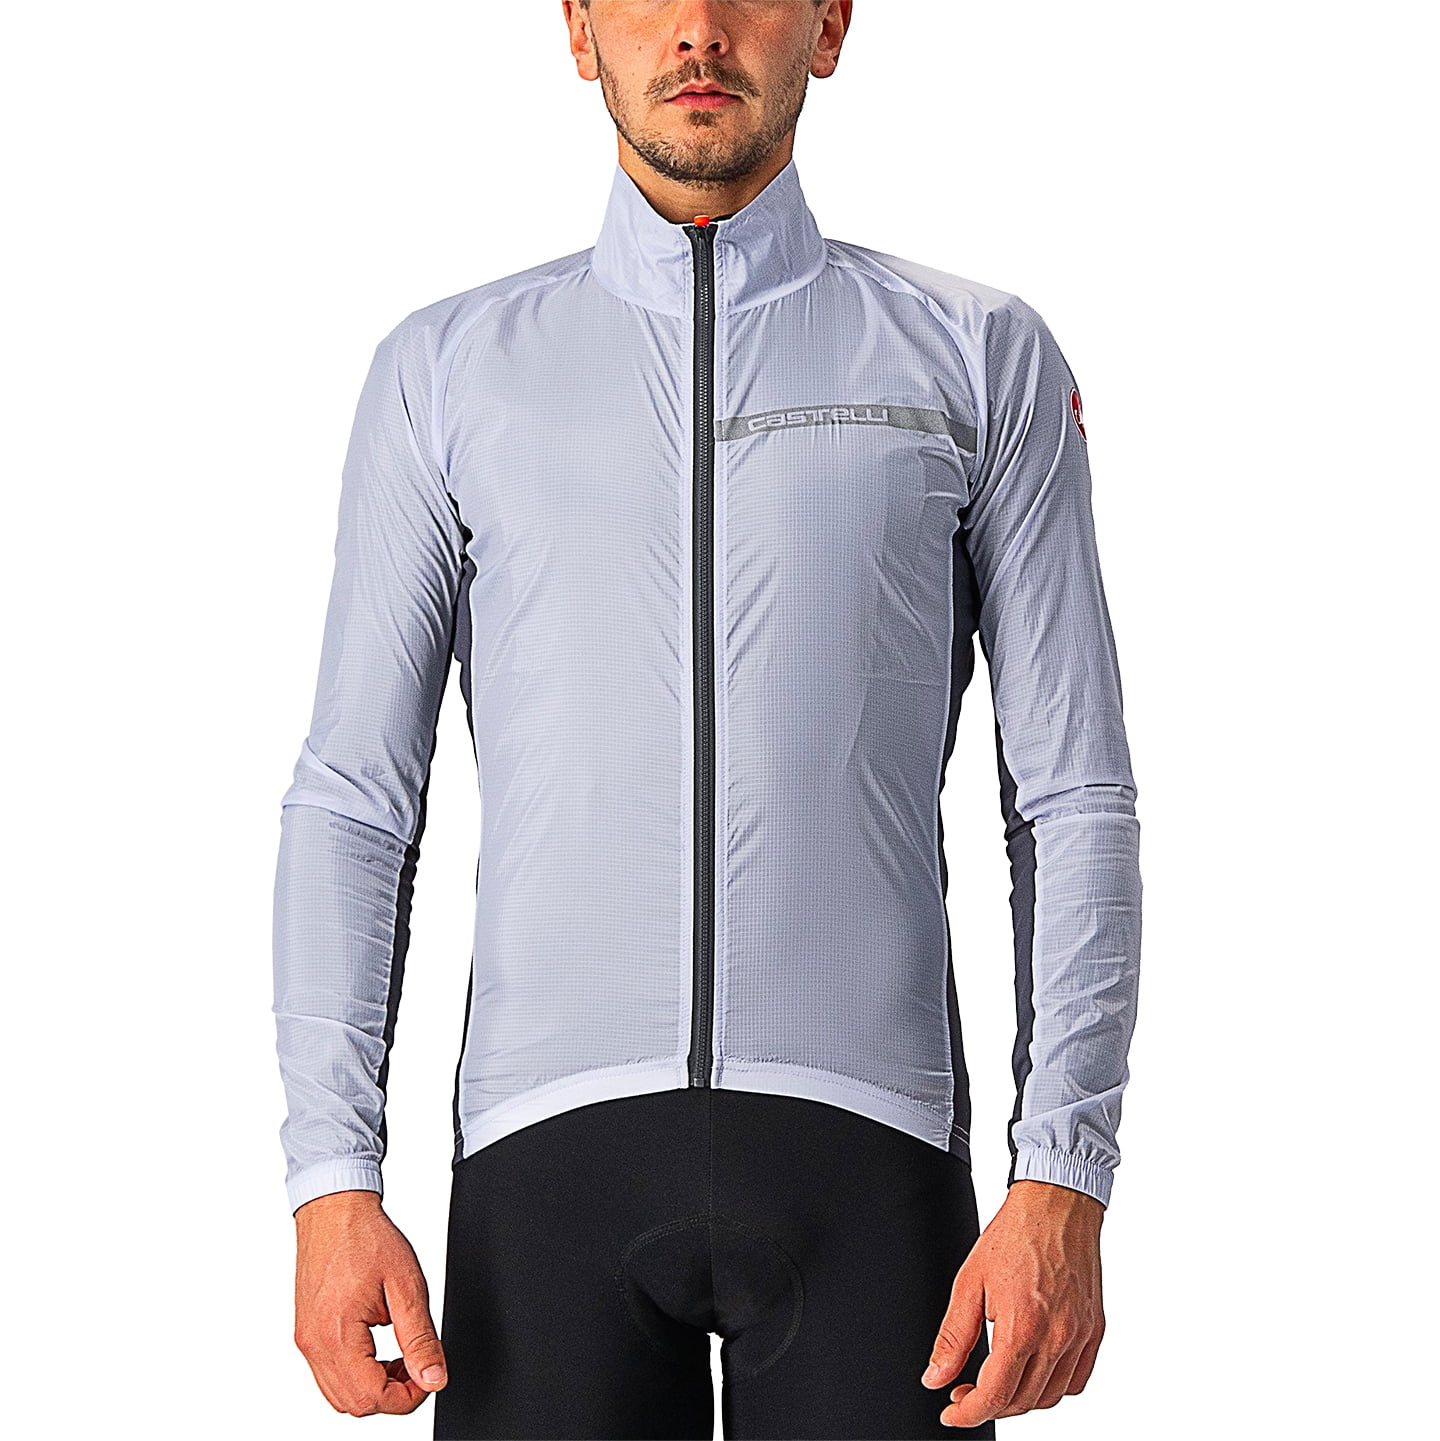 Squadra Stretch Wind Jacket Wind Jacket, for men, size XL, Bike jacket, Cycle gear